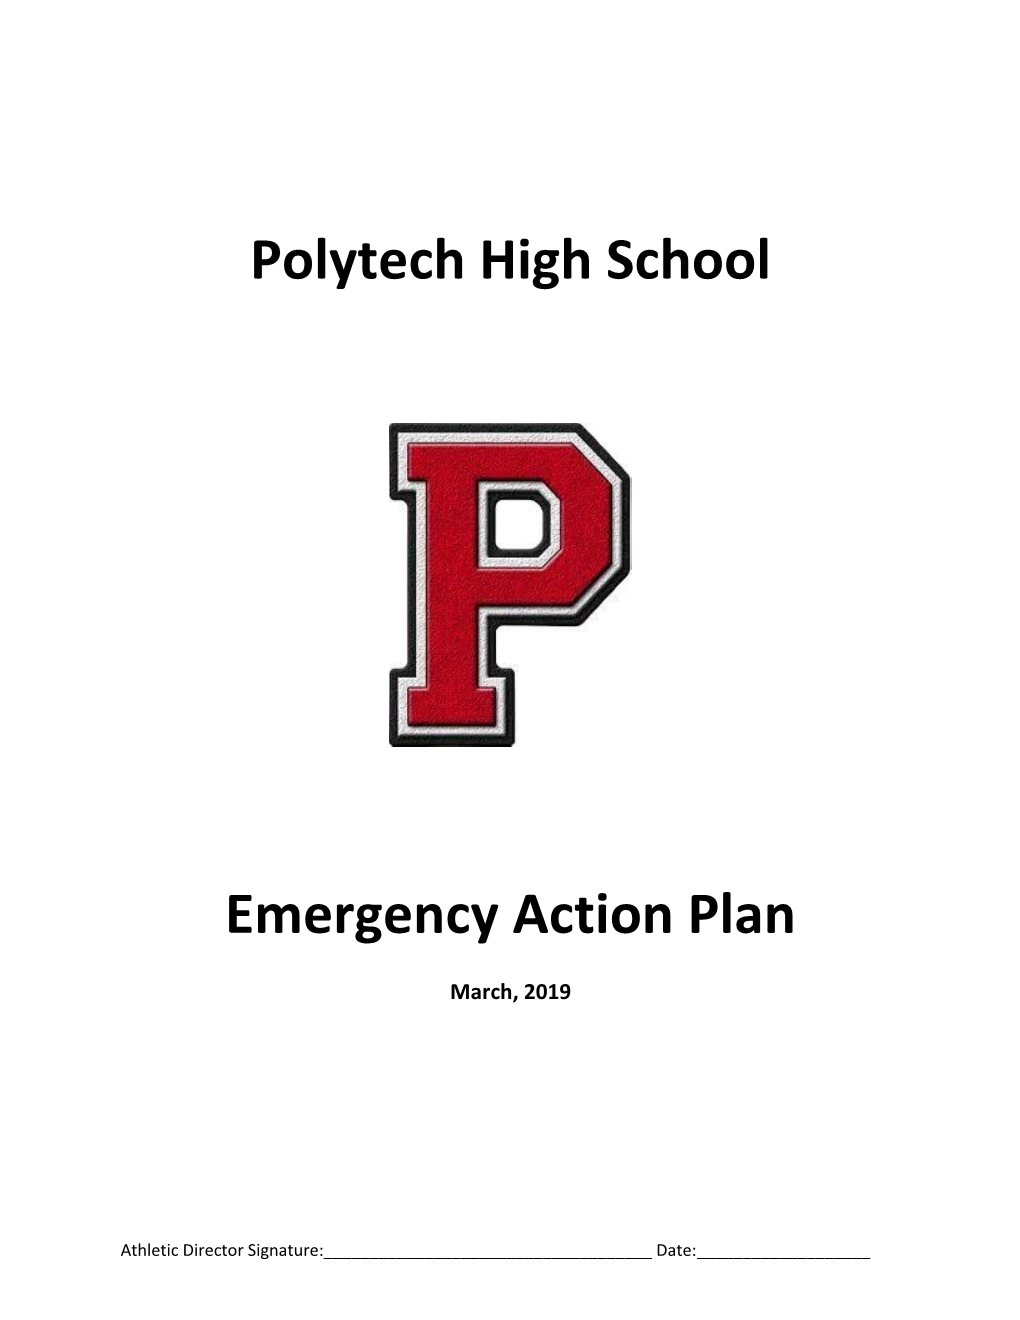 Polytech High School Emergency Action Plan